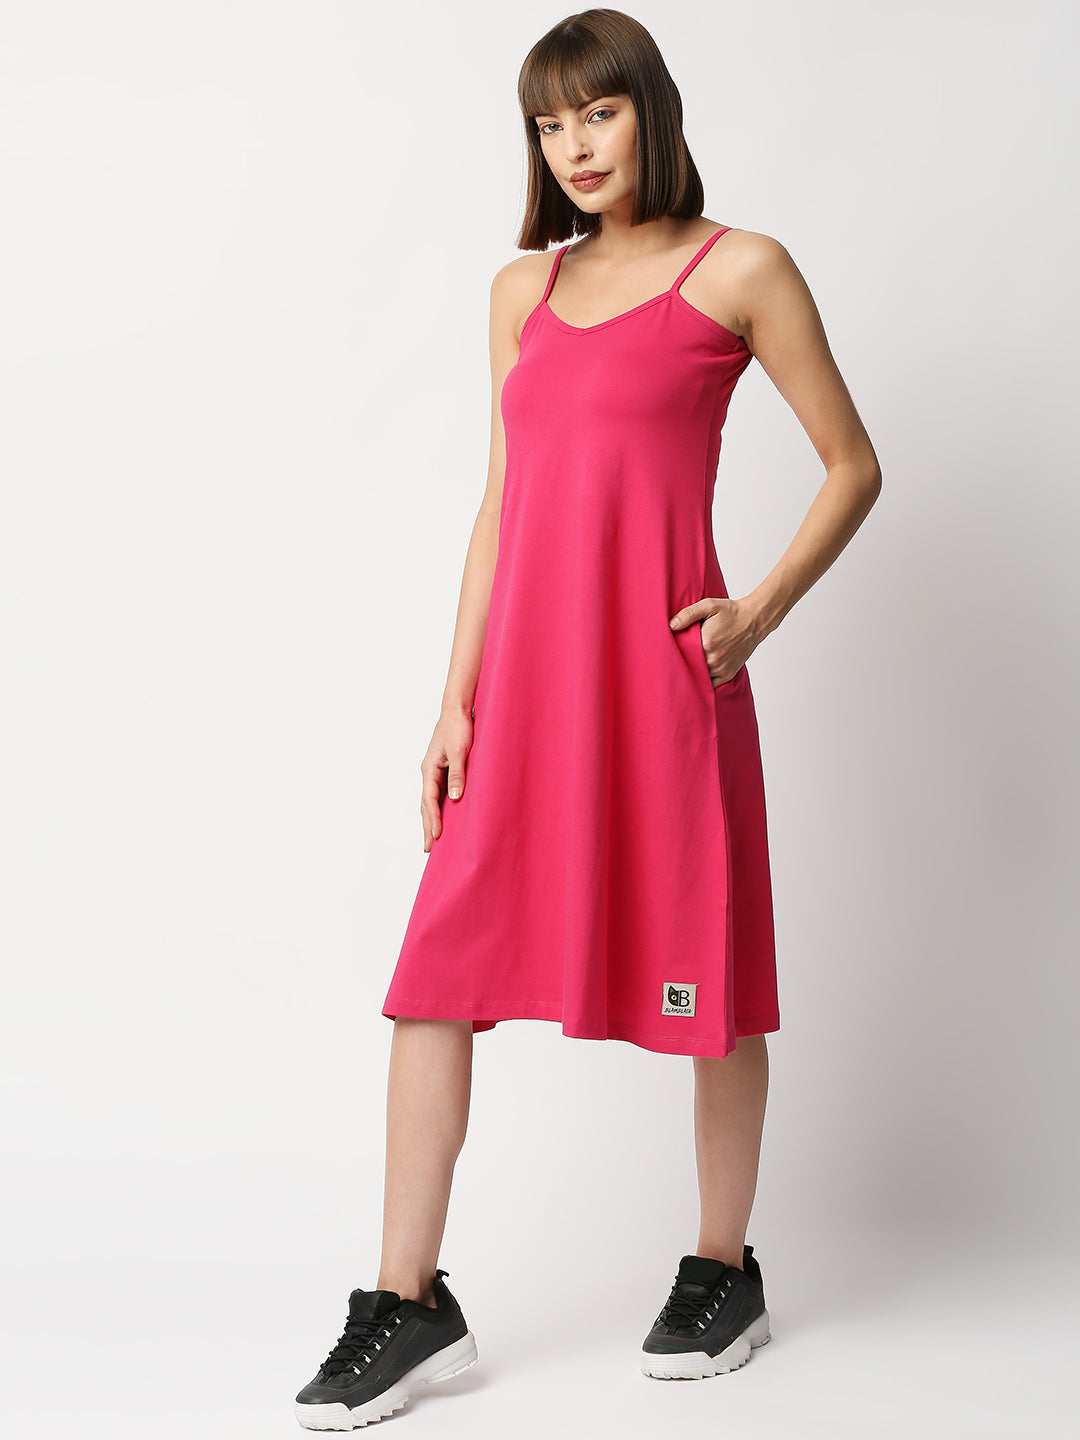 Buy BLAMBLACK Women Round neck Fusia Pink Solid Sleeveless Dresses